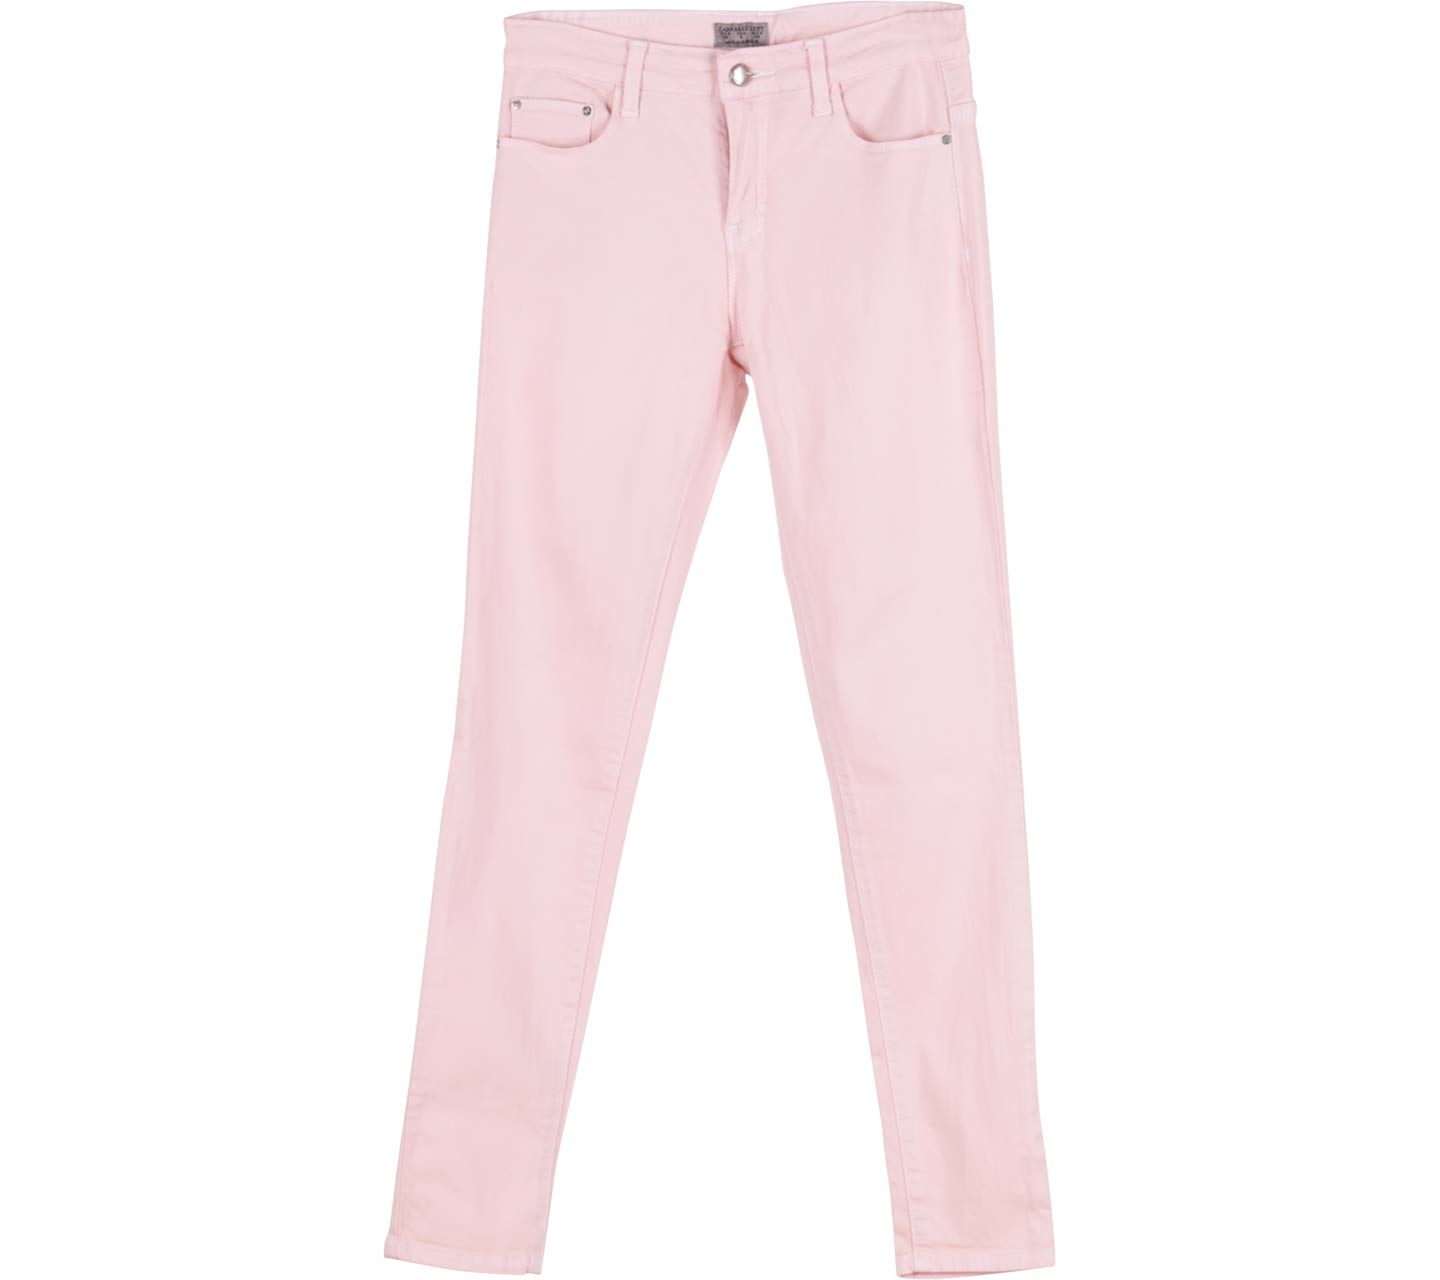 Zara Peach Skinny Jeans Pants